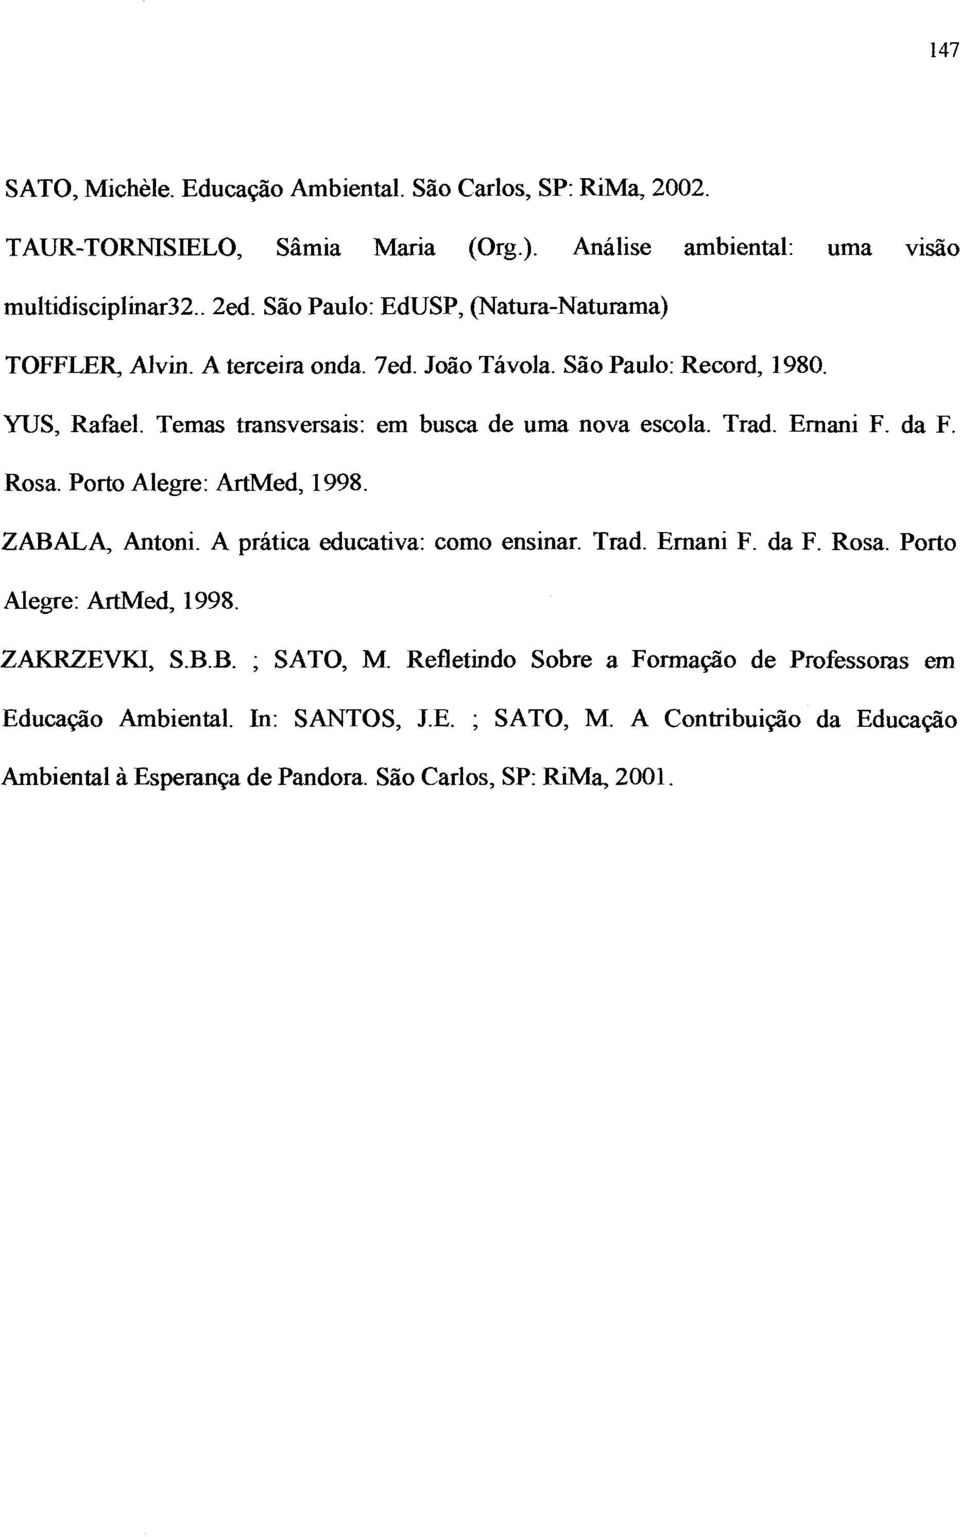 Trad. Ernani F. da F. Rosa. Porto Alegre: ArtMed, 1998. ZABALA, Antoni. A prática educativa: como ensinar. Trad. Ernani F. da F. Rosa. Porto Alegre: ArtMed, 1998. ZAKRZEVKI, S.